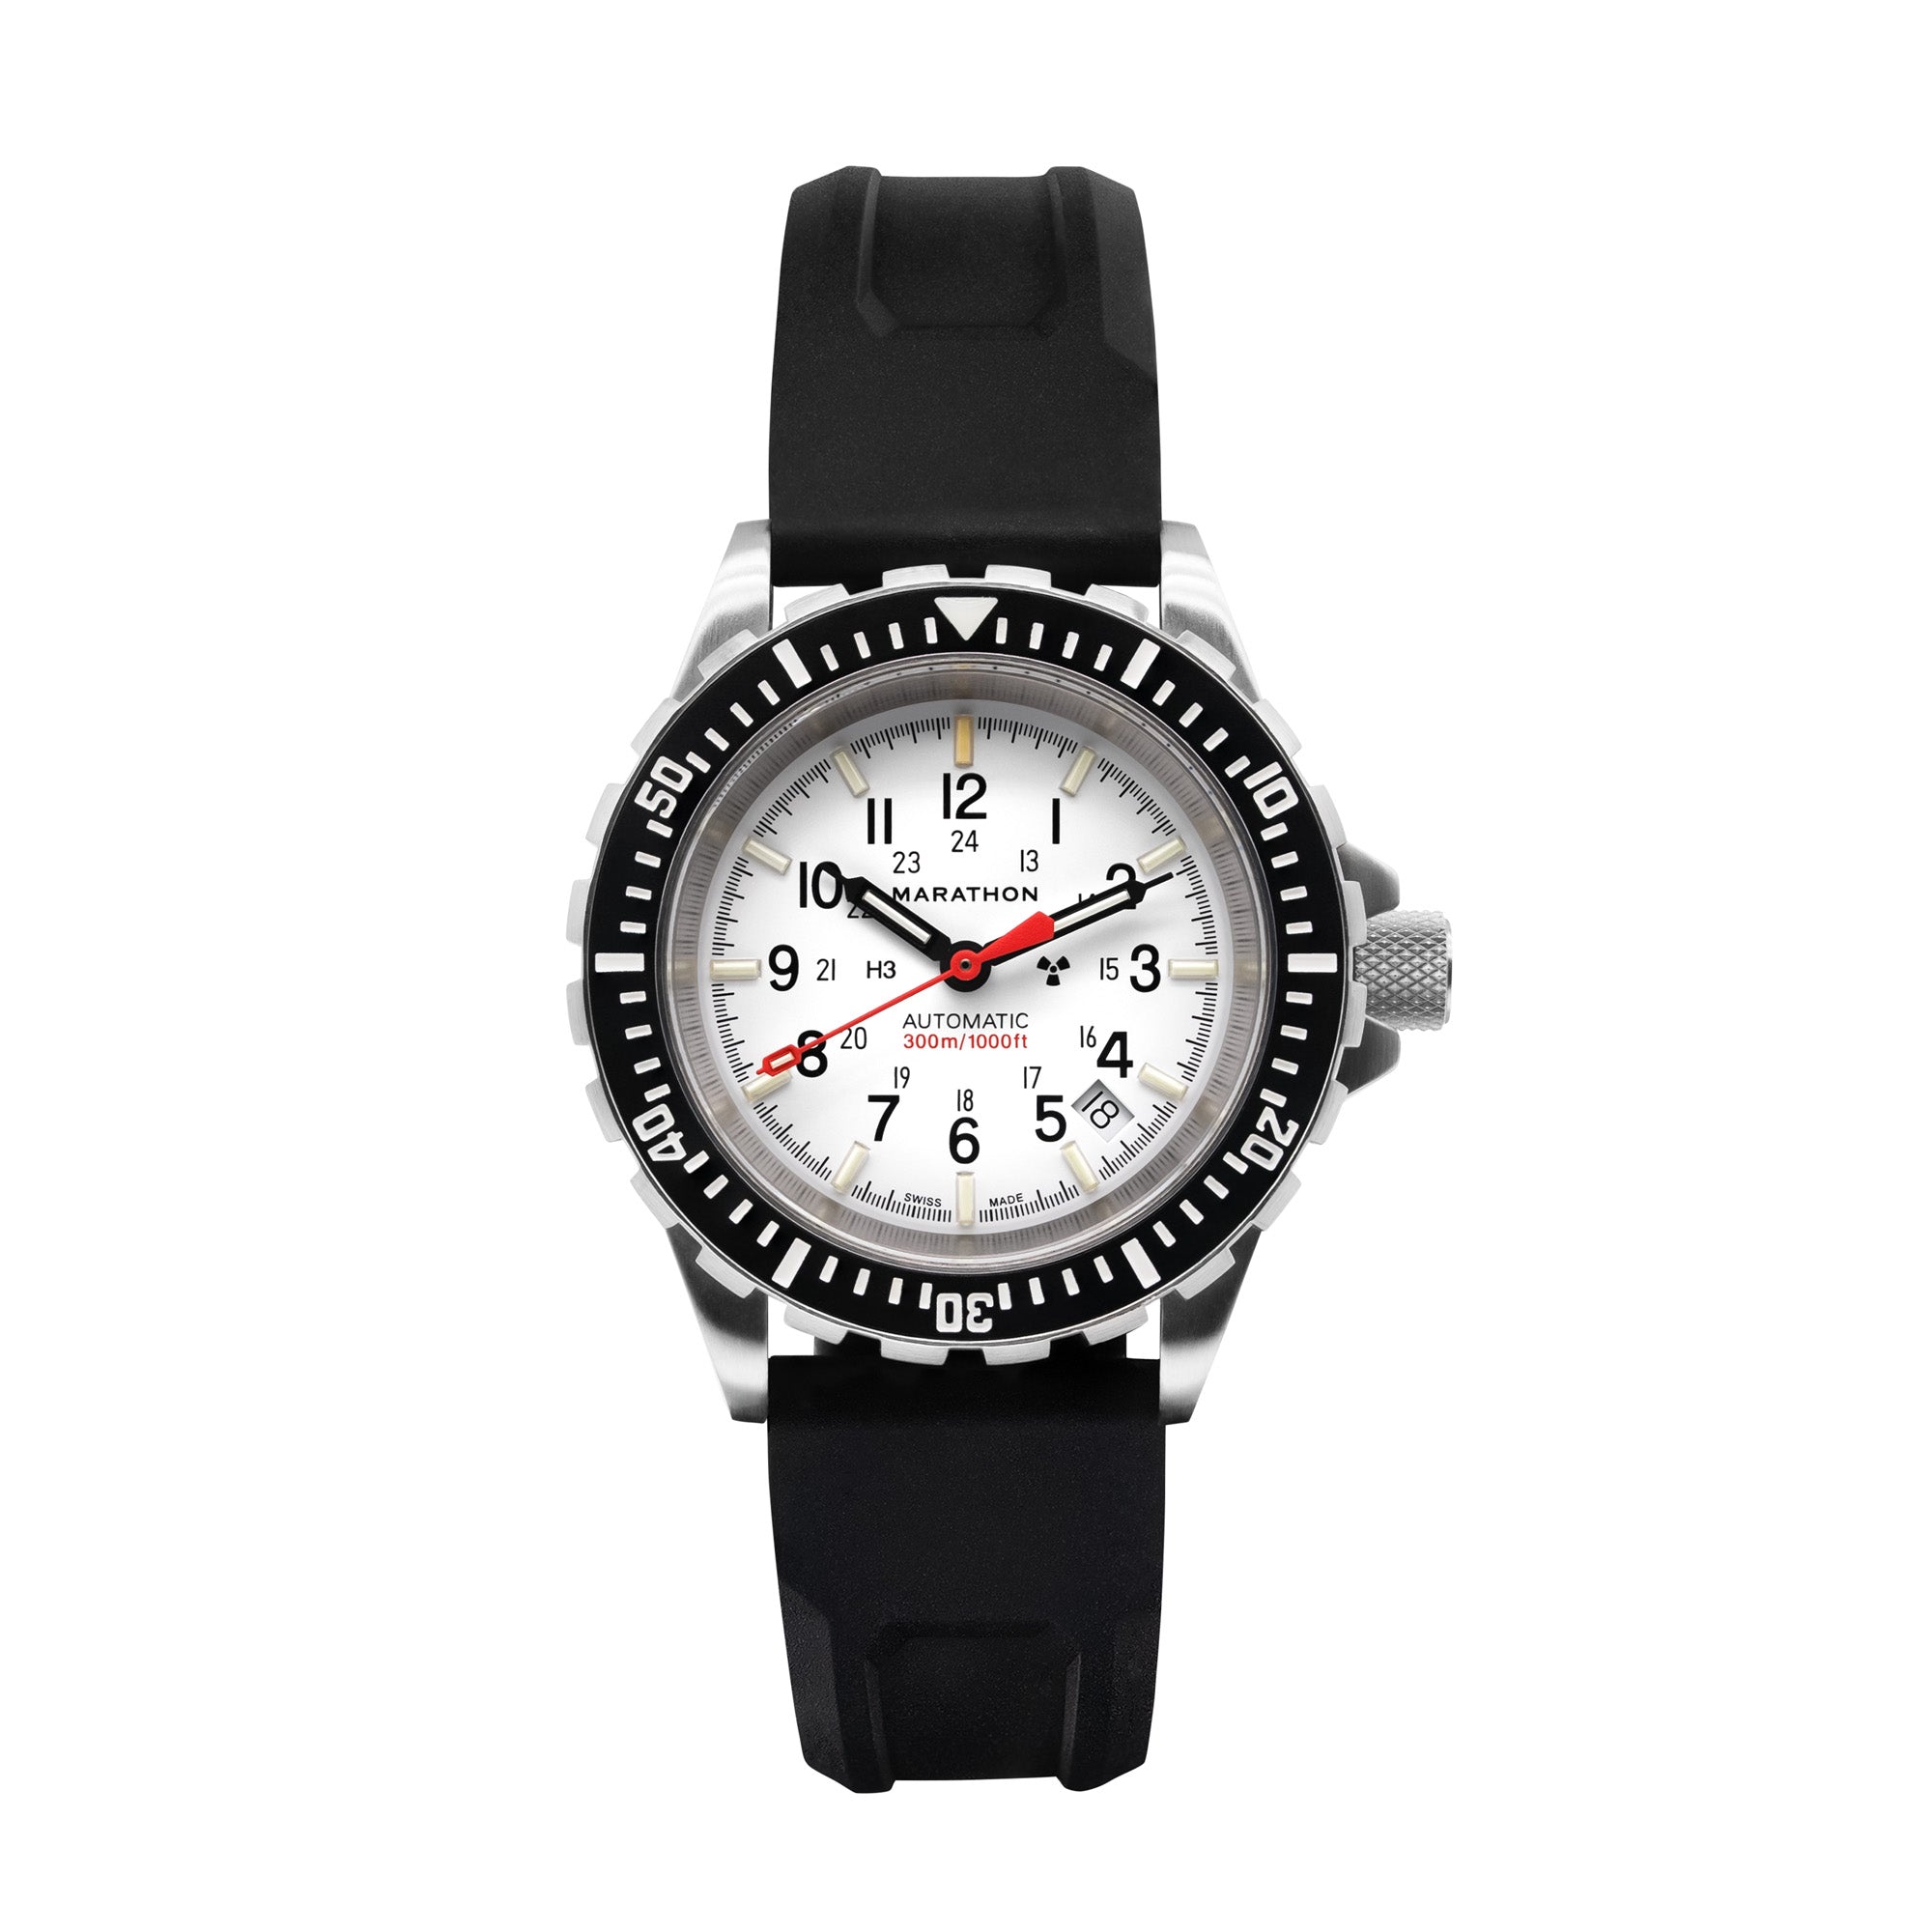 46mm Jumbo Diver/Pilot's Automatic Chronograph (CSAR) – Marathon Watch